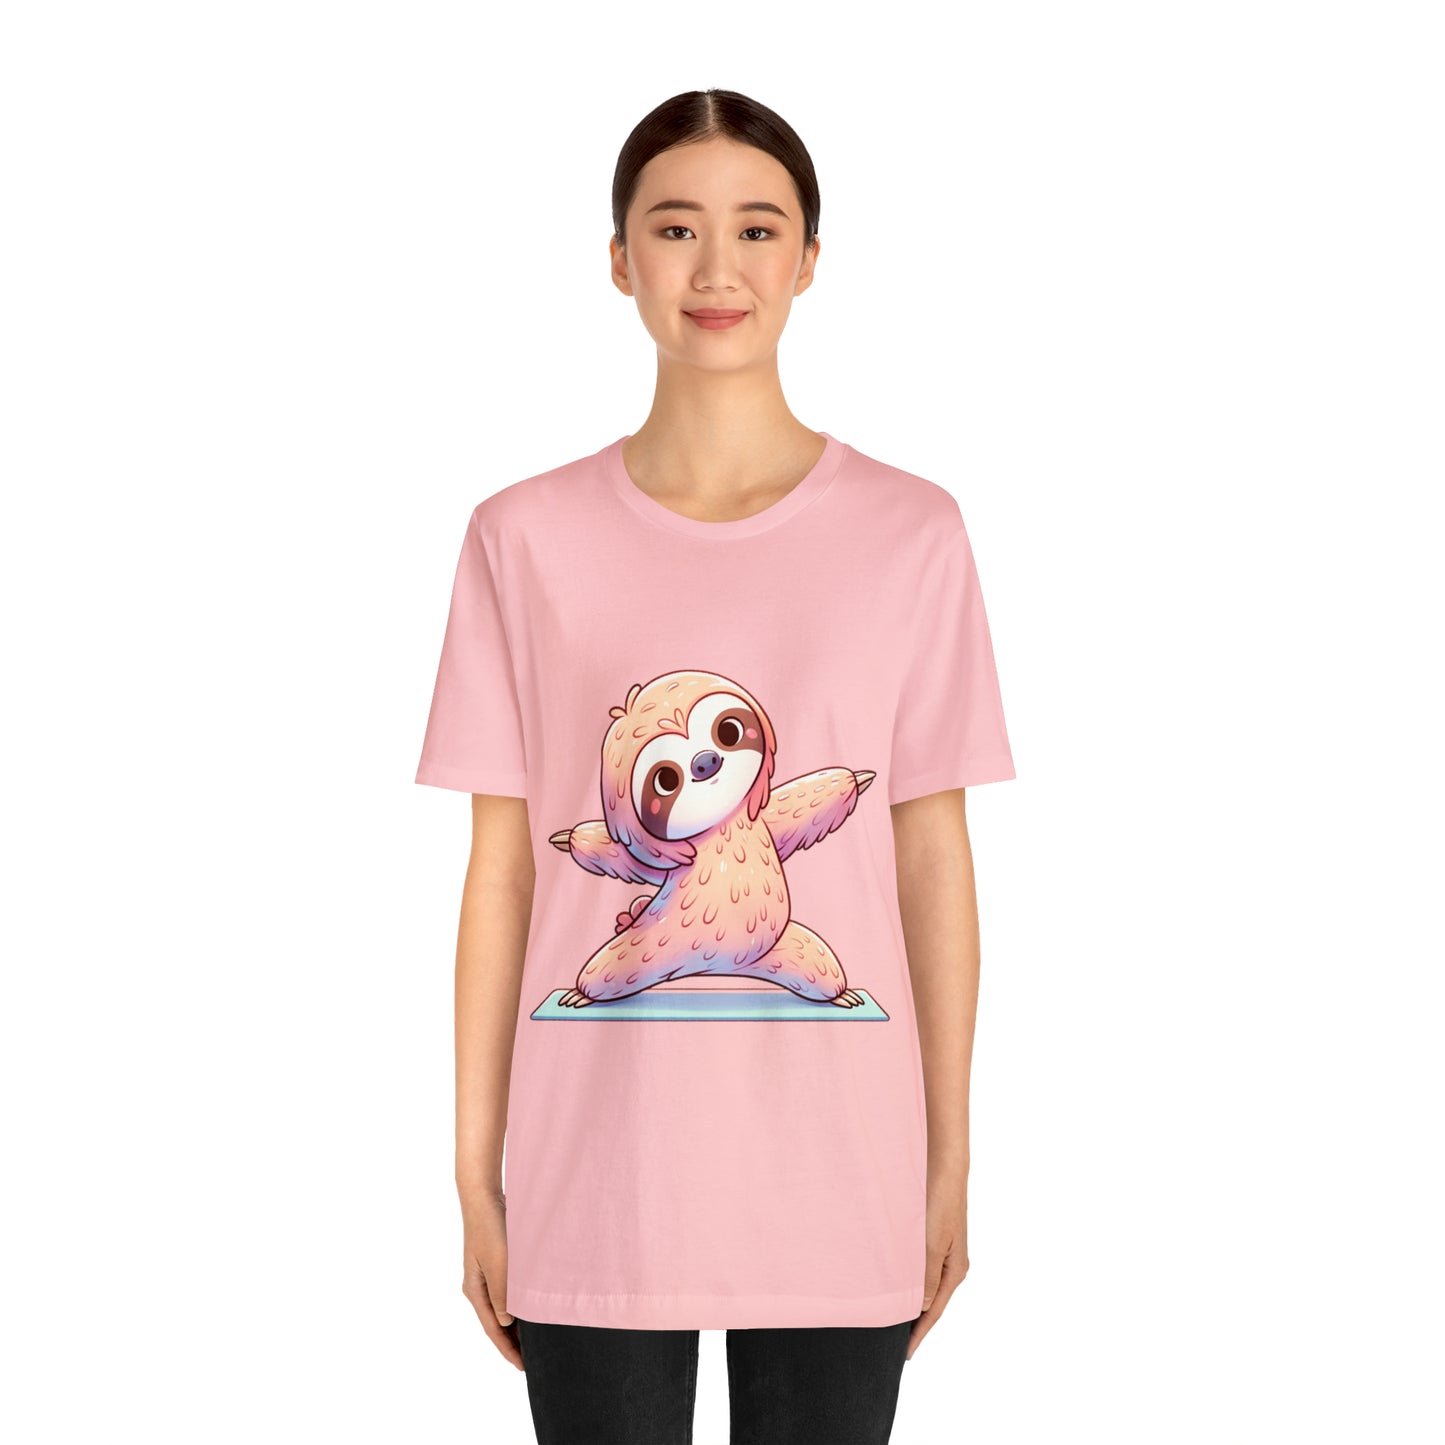 Sloth Yoga T-Shirt, Funny Yoga Shirt, Yoga Teacher Gift, Funny Gym Tee, Sloth T Shirt